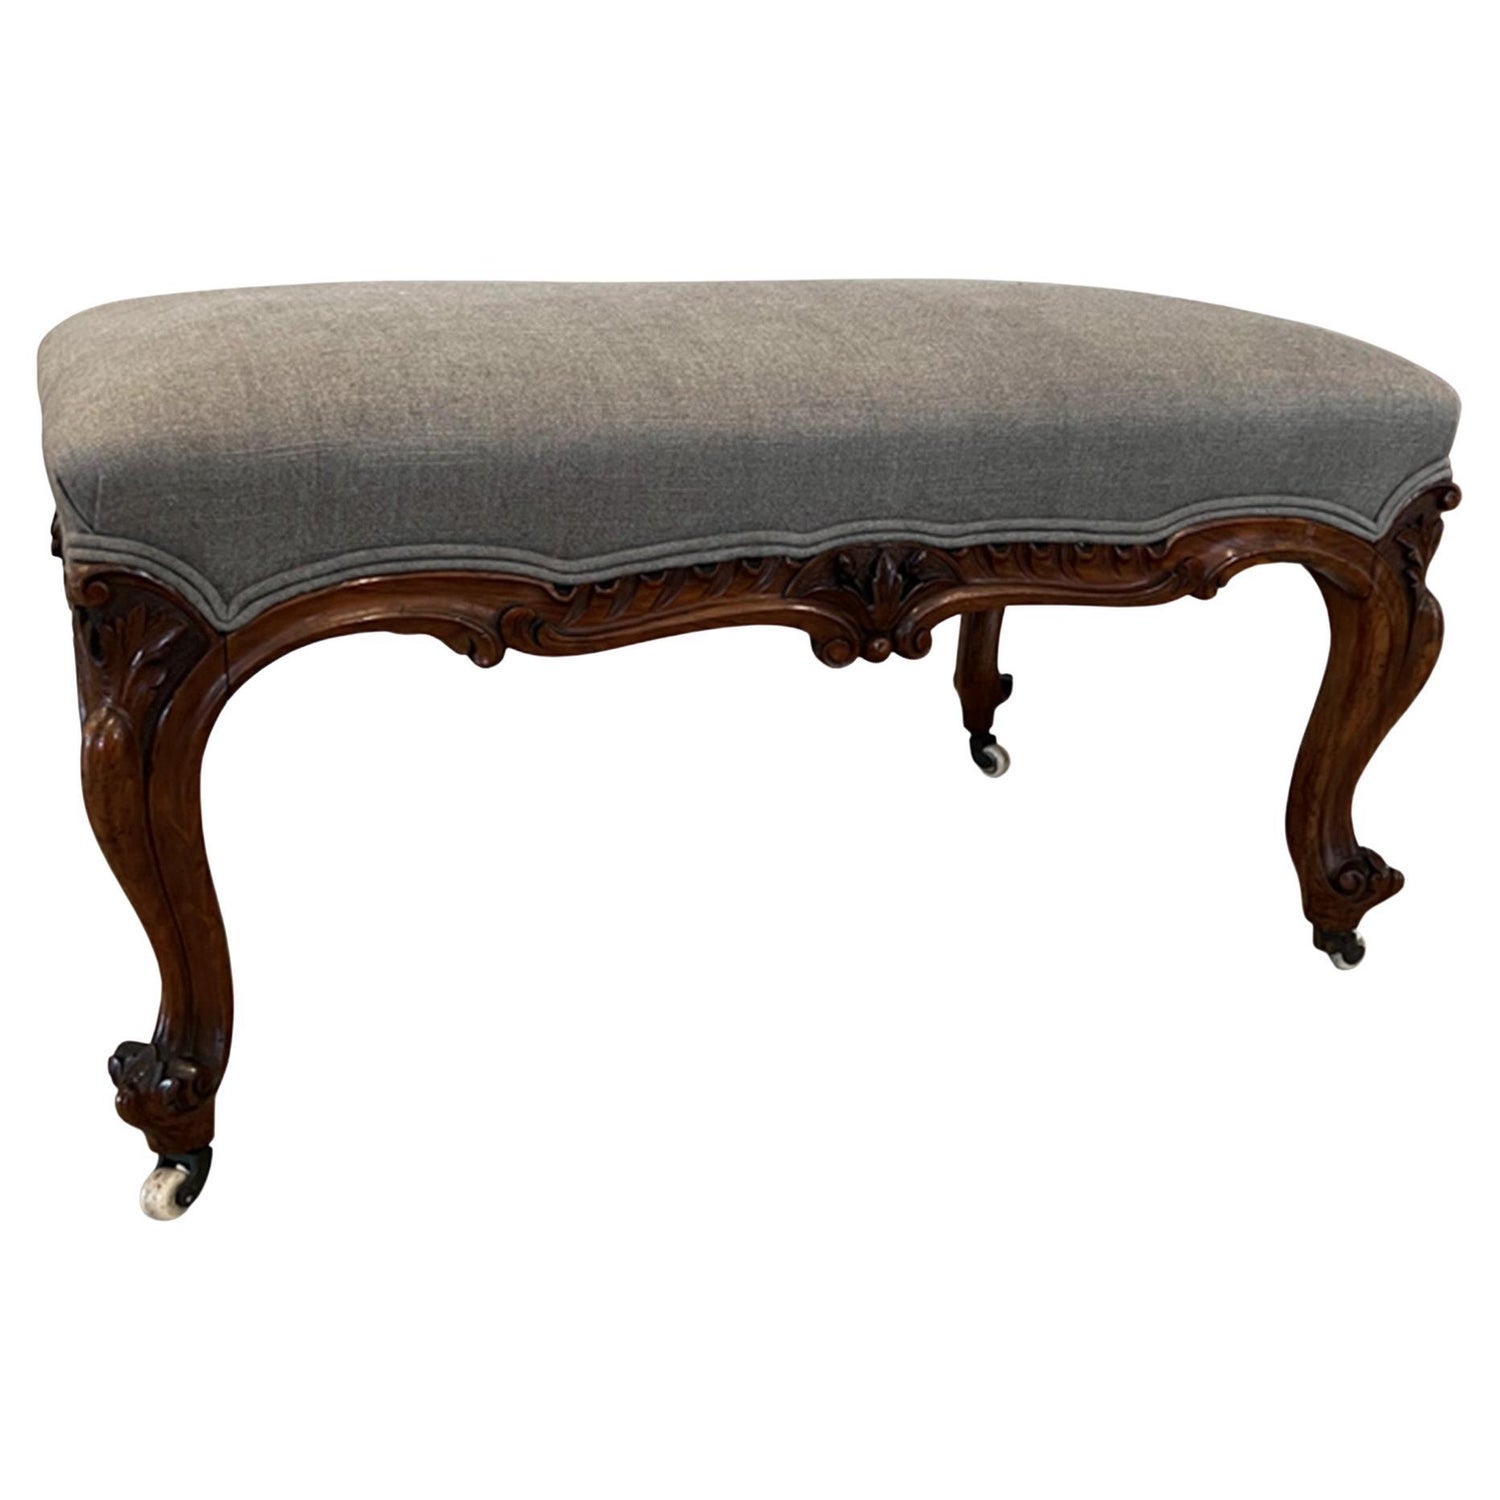 https://a.1stdibscdn.com/large-19th-century-walnut-upholstered-foot-stool-for-sale/f_64502/f_278345321647528813116/f_27834532_1647528813613_bg_processed.jpg?width=1500